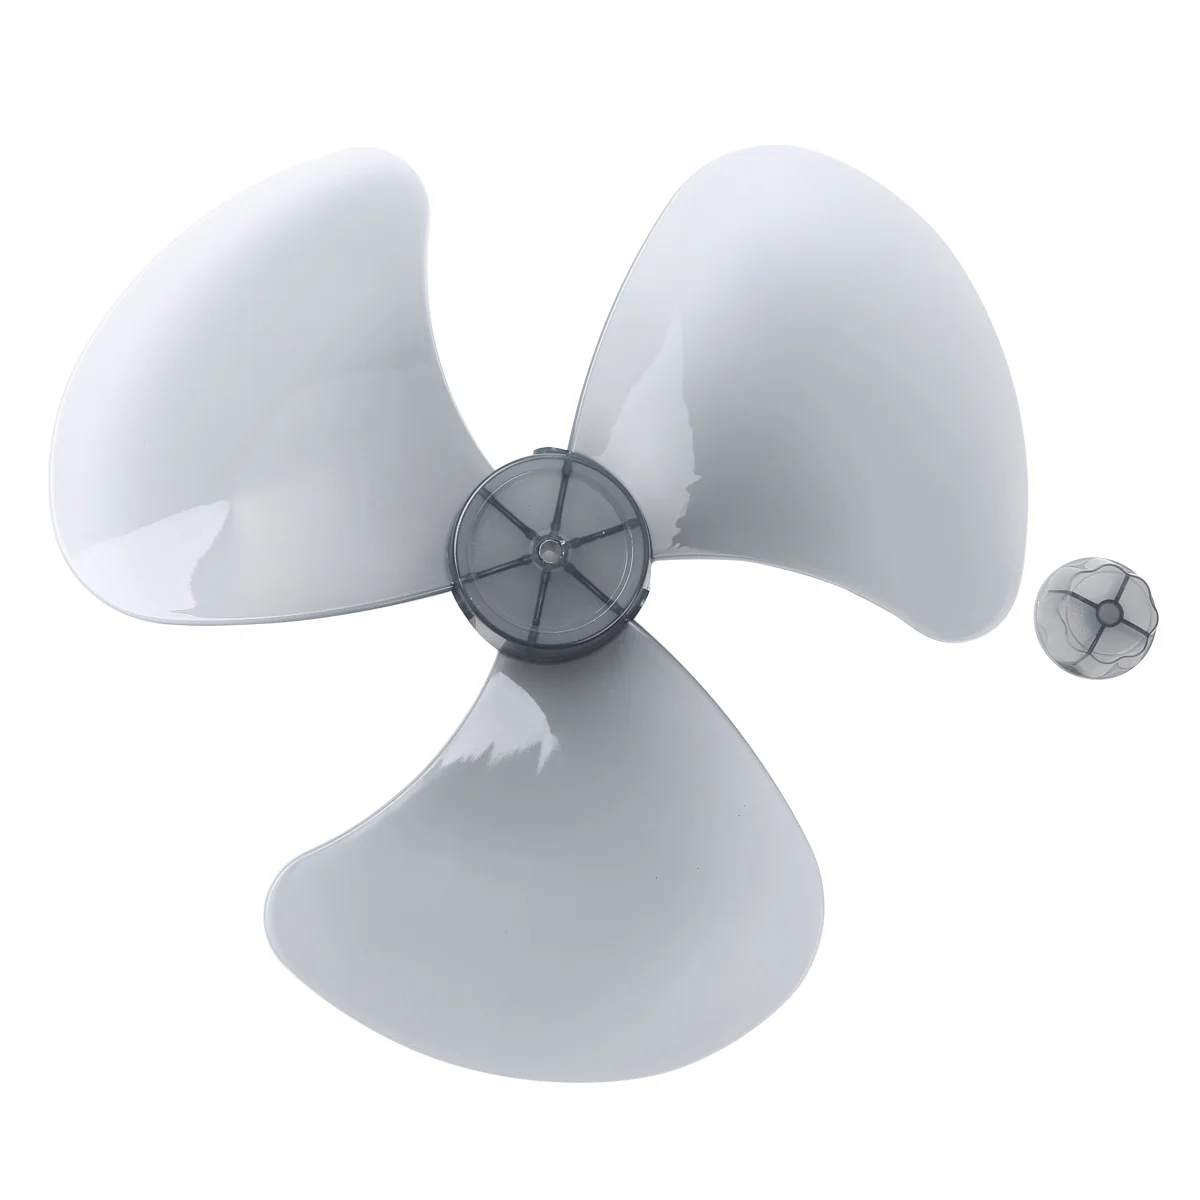 iiniim Household Plastic Fan Blades Replacement 16 inch with Fan Nut One Size 